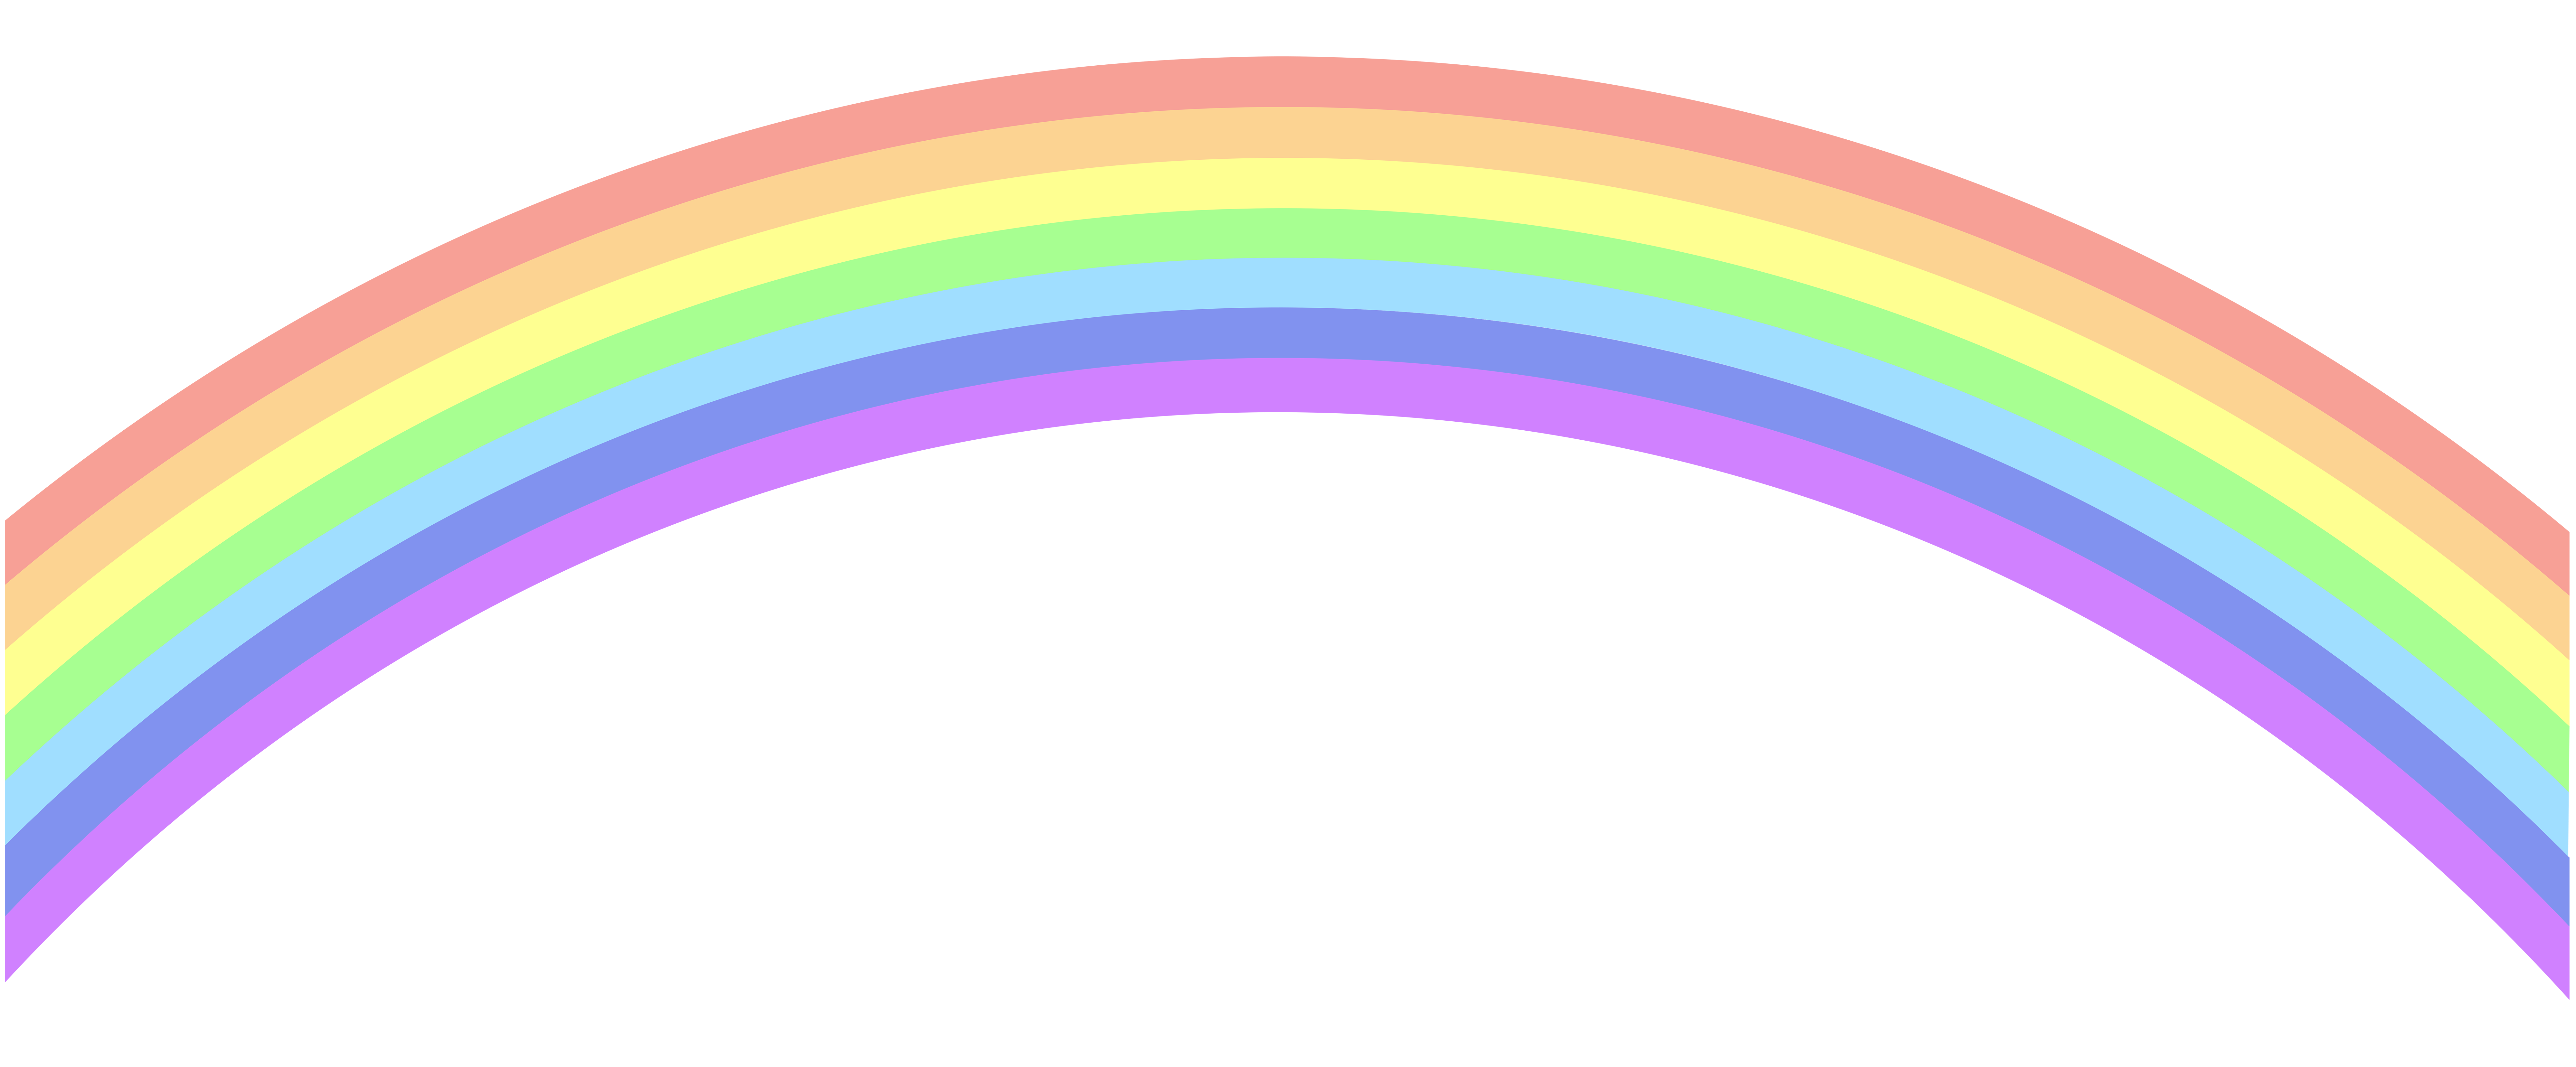 free vector rainbow clipart - photo #4